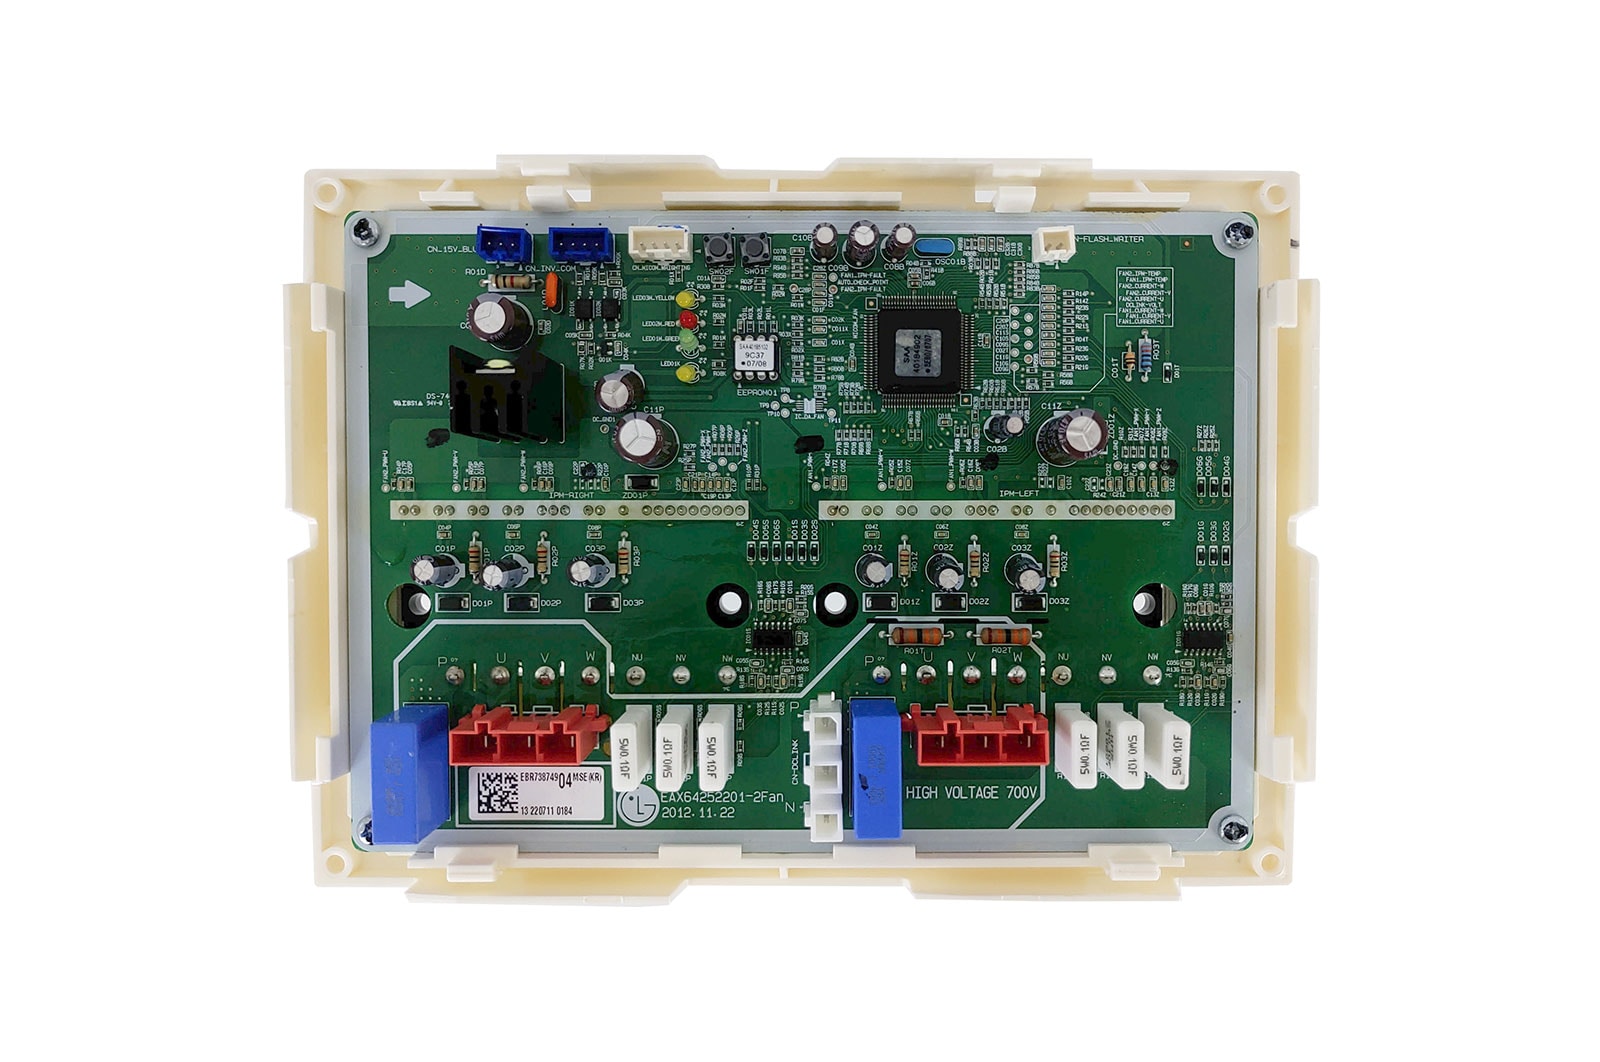 LG Placa da condensadora Ar Condicionado LG ARUN80BT2, ARUN100LT2.EWGBLEU, ARUN120LT2 - EBR73874904, EBR73874904